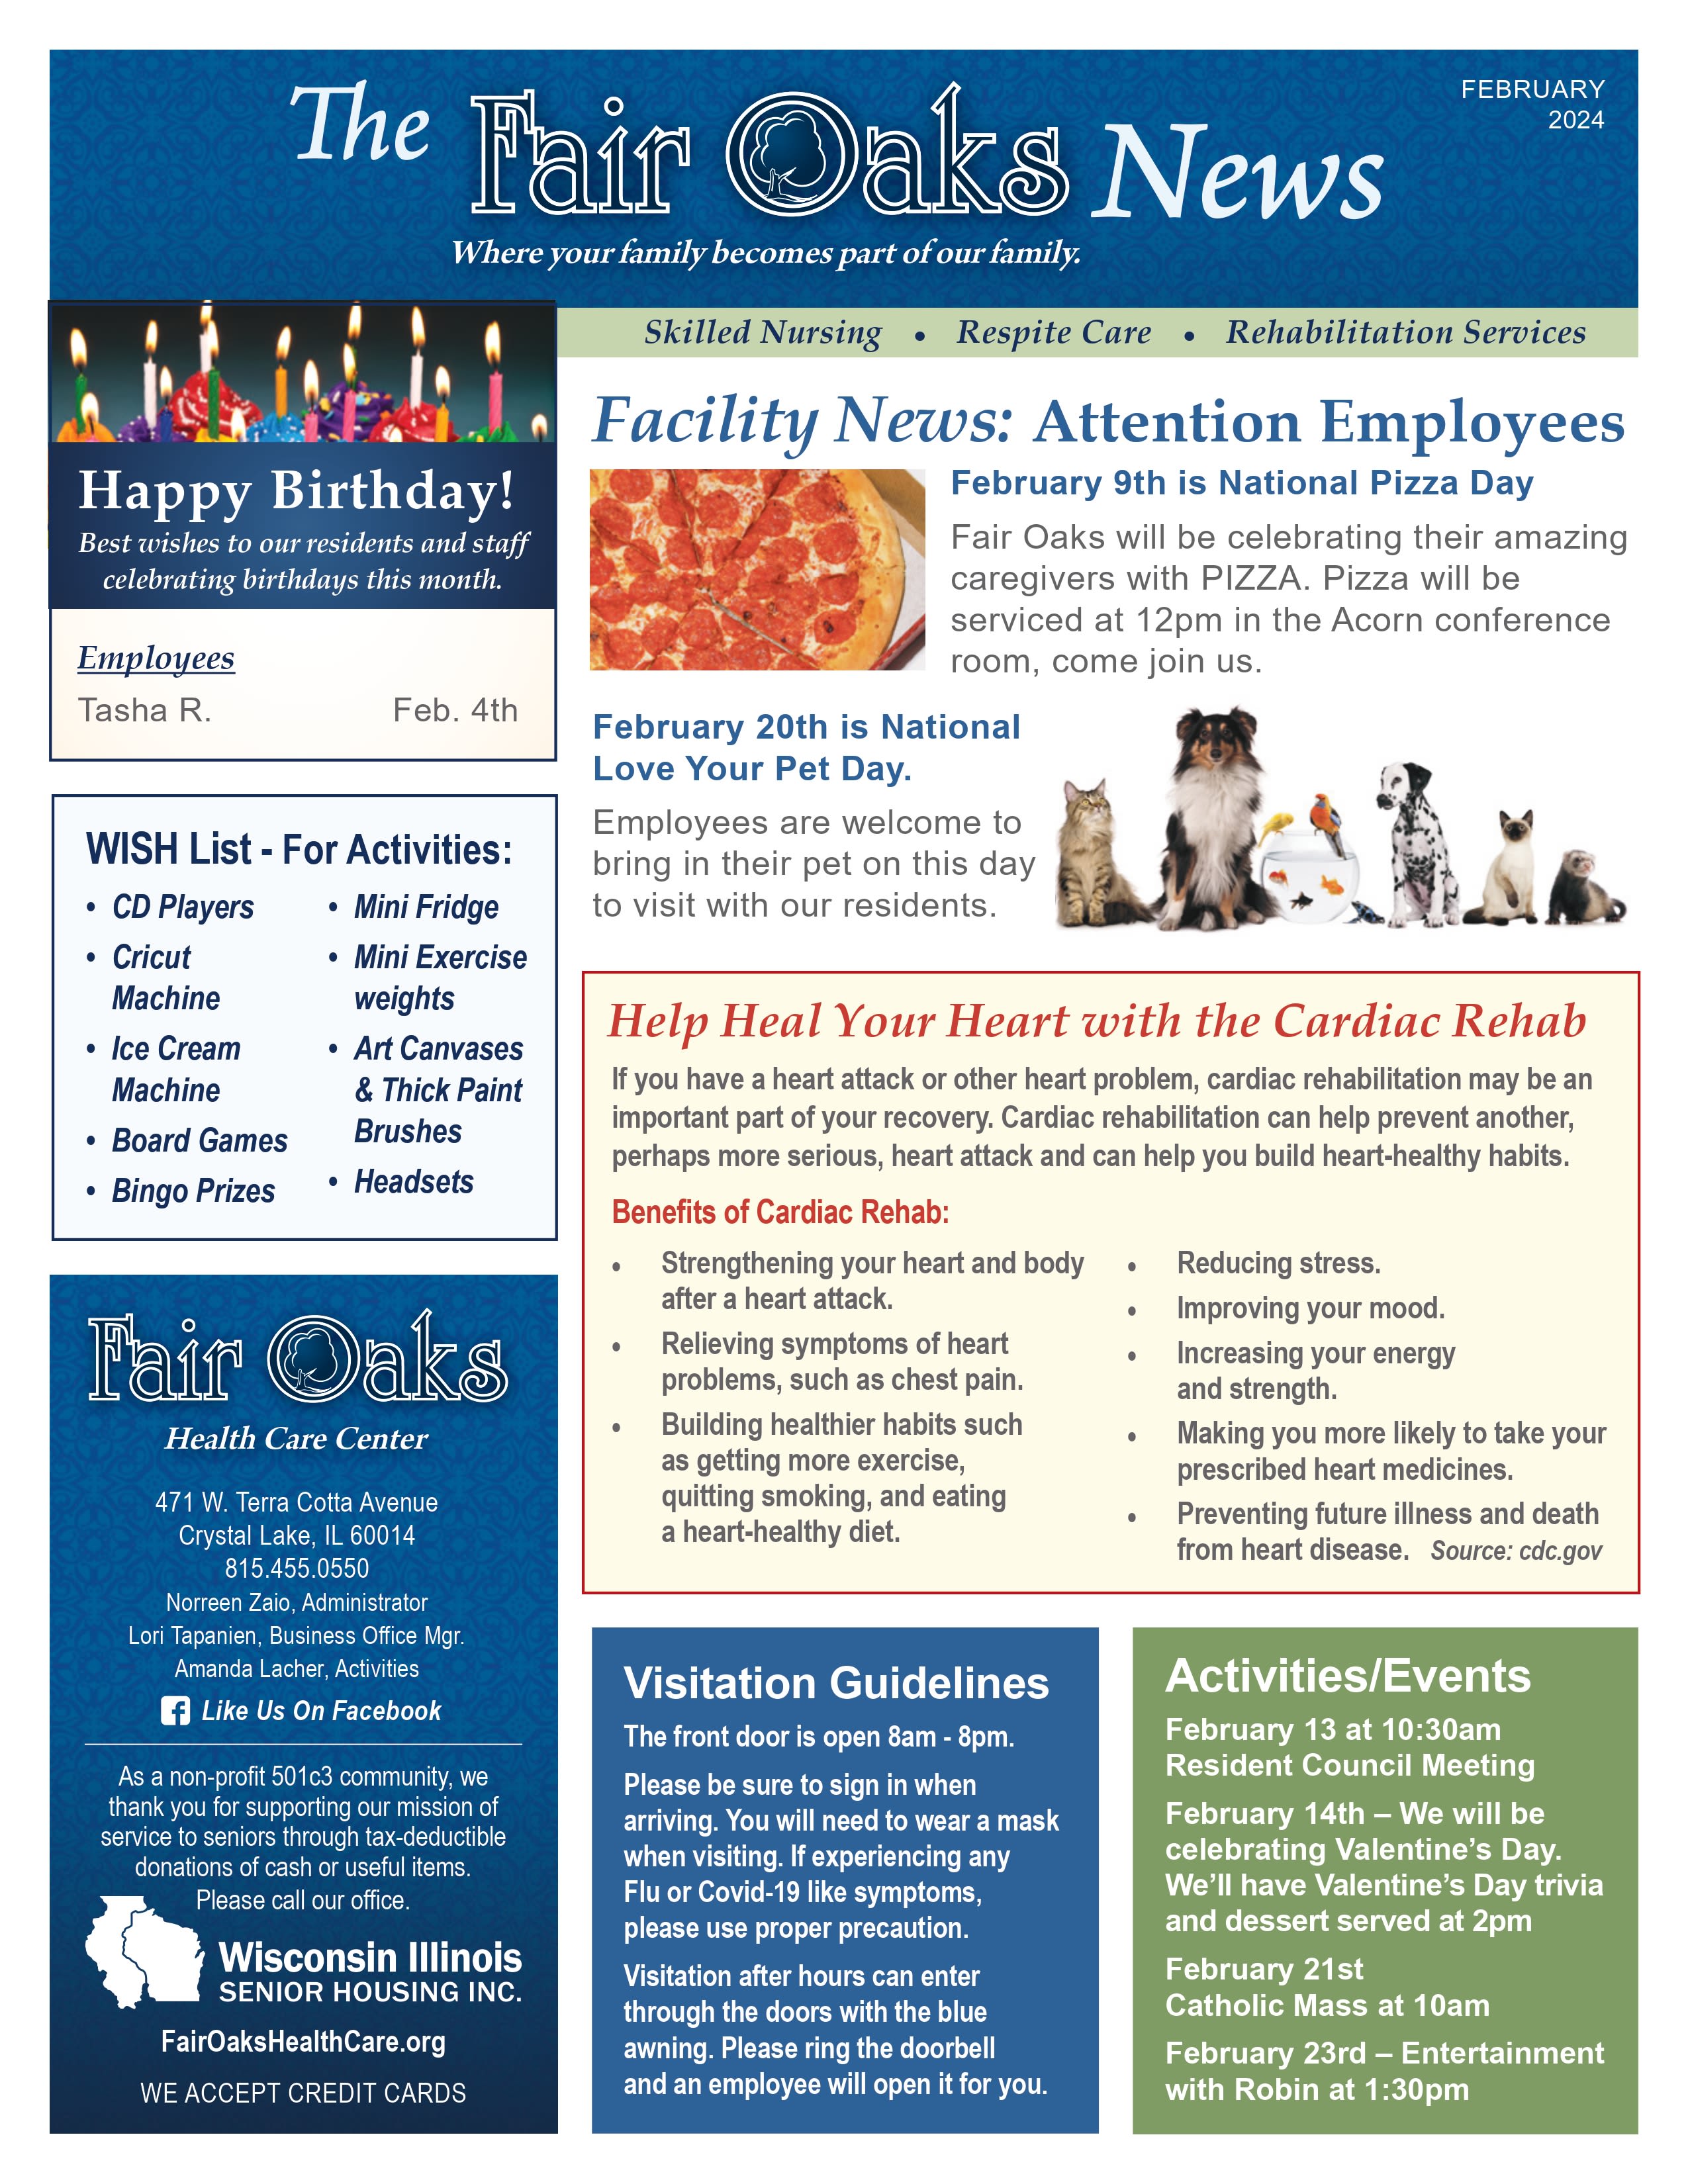 February 2024 Newsletter at Fair Oaks Health Care Center in Crystal Lake, Illinois